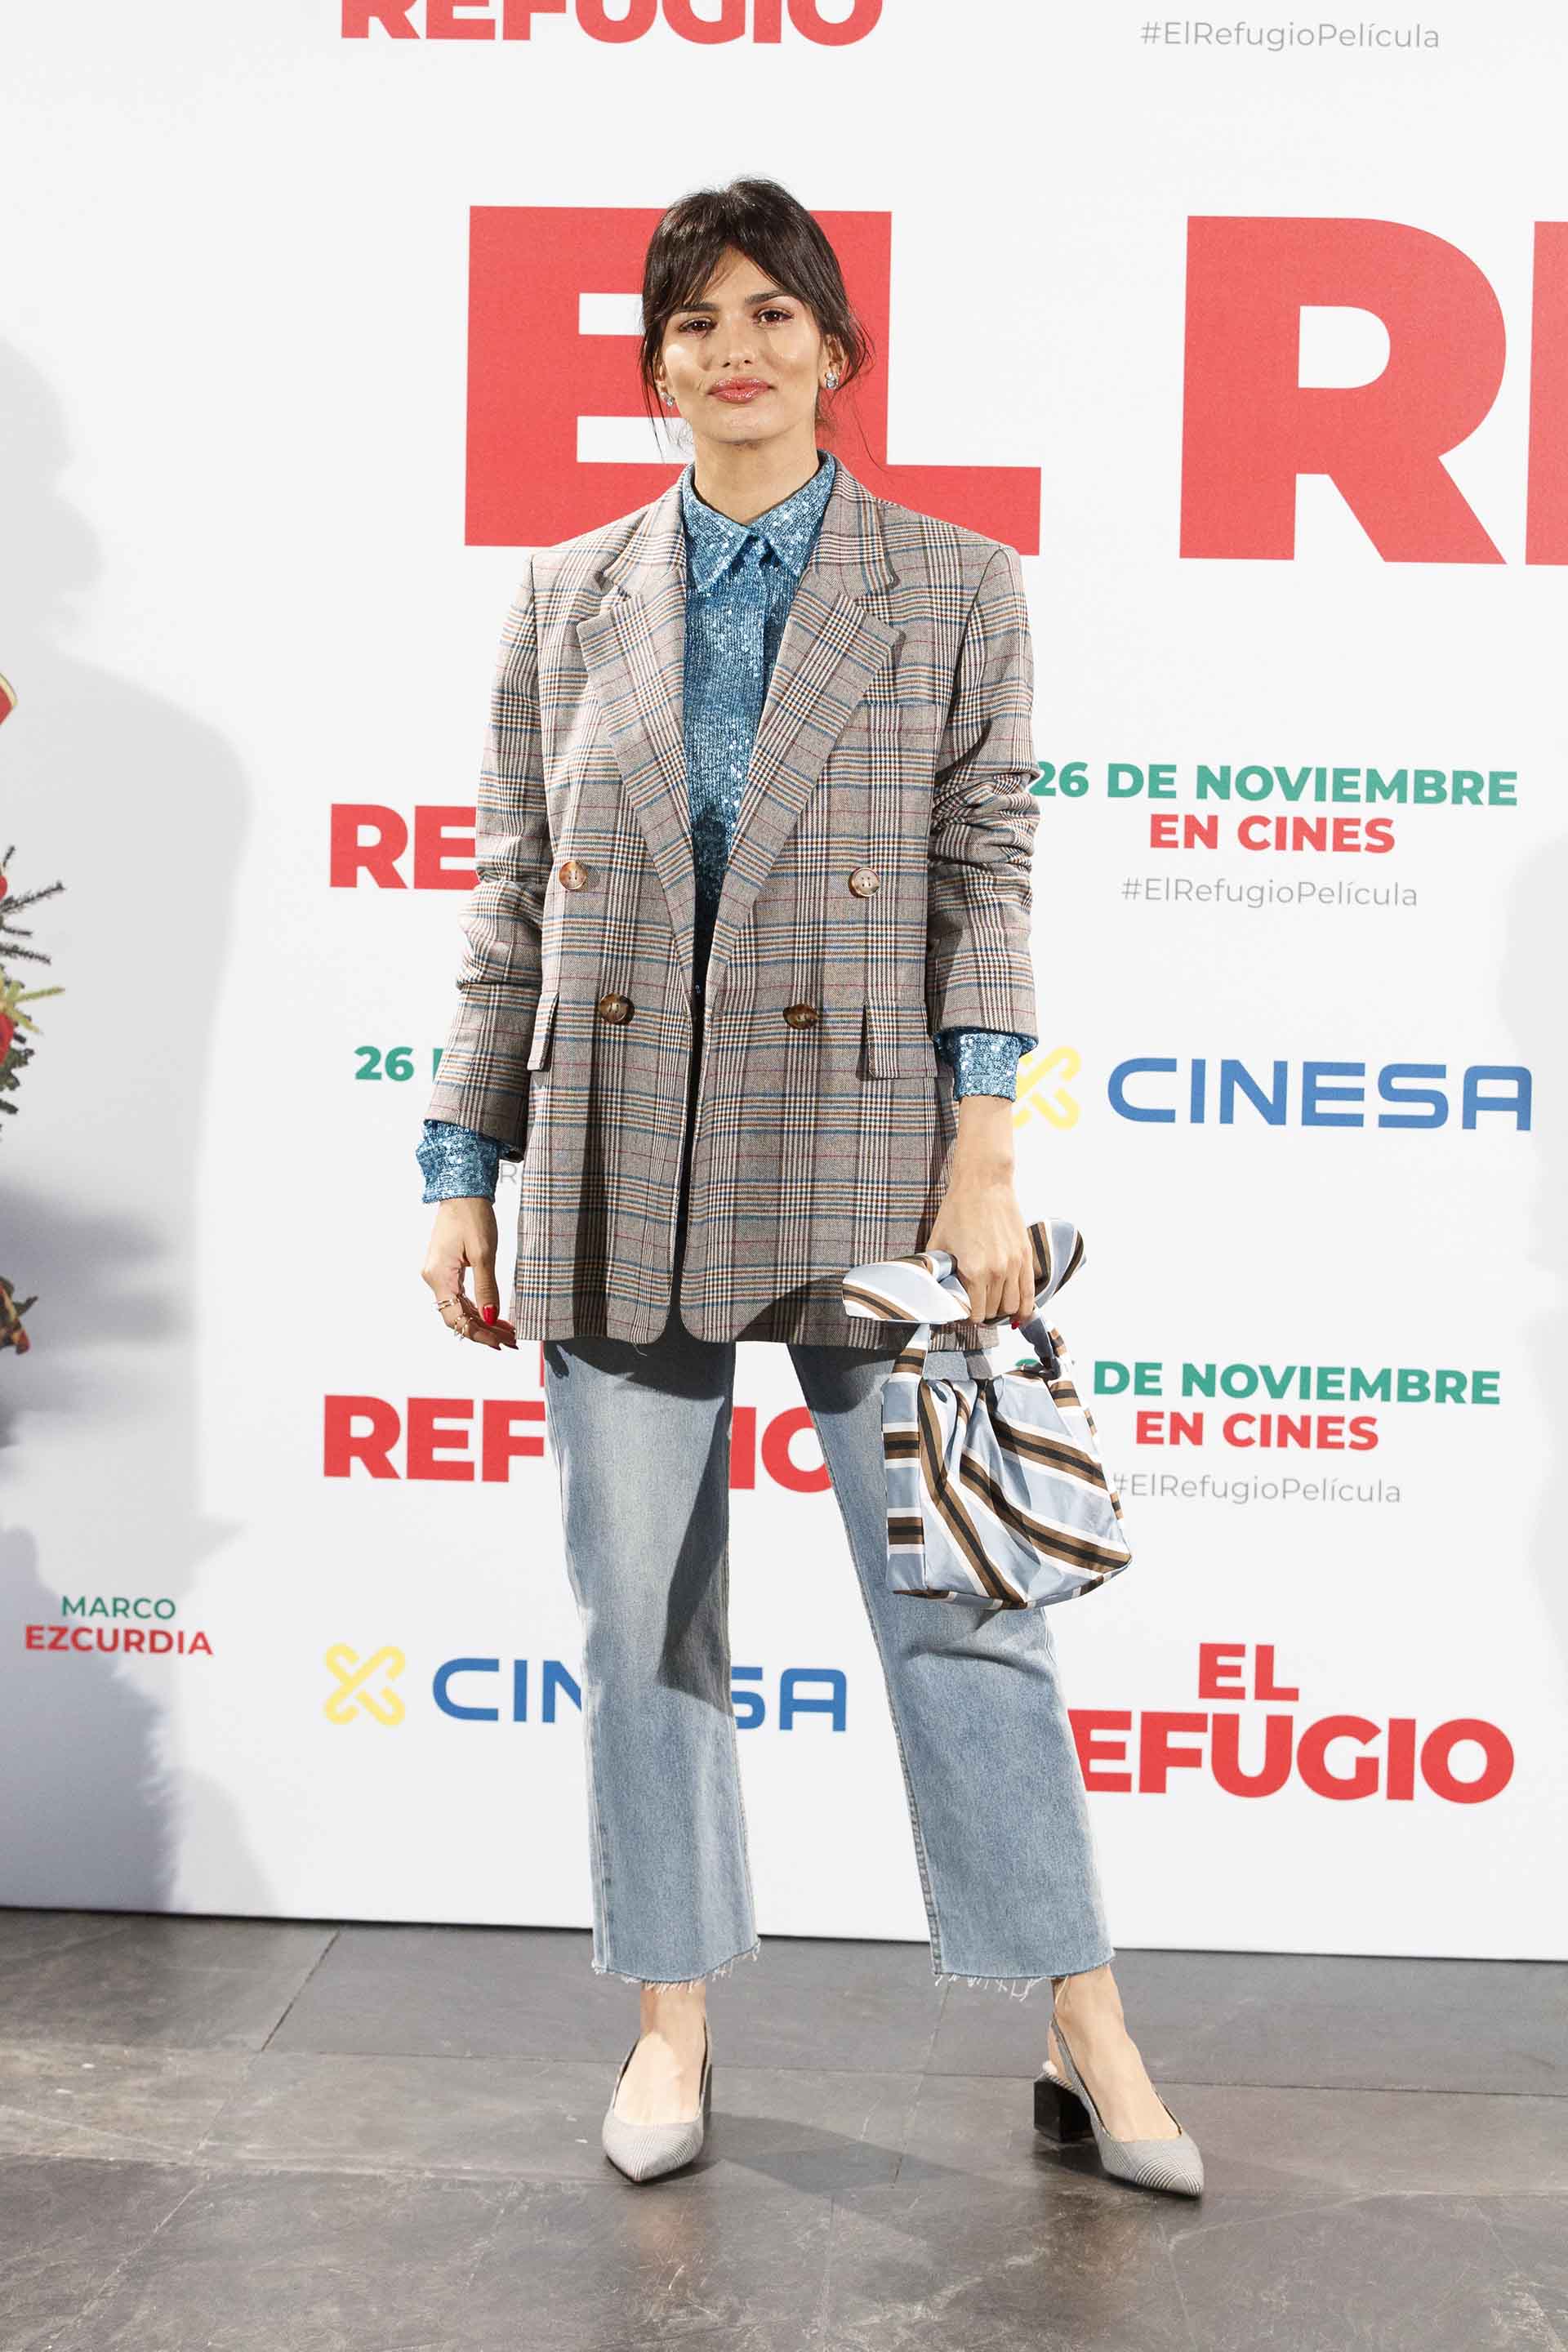 Actress Sara Salamo at photocall film El Refugio in Madrid on Friday, 19 November 2021.